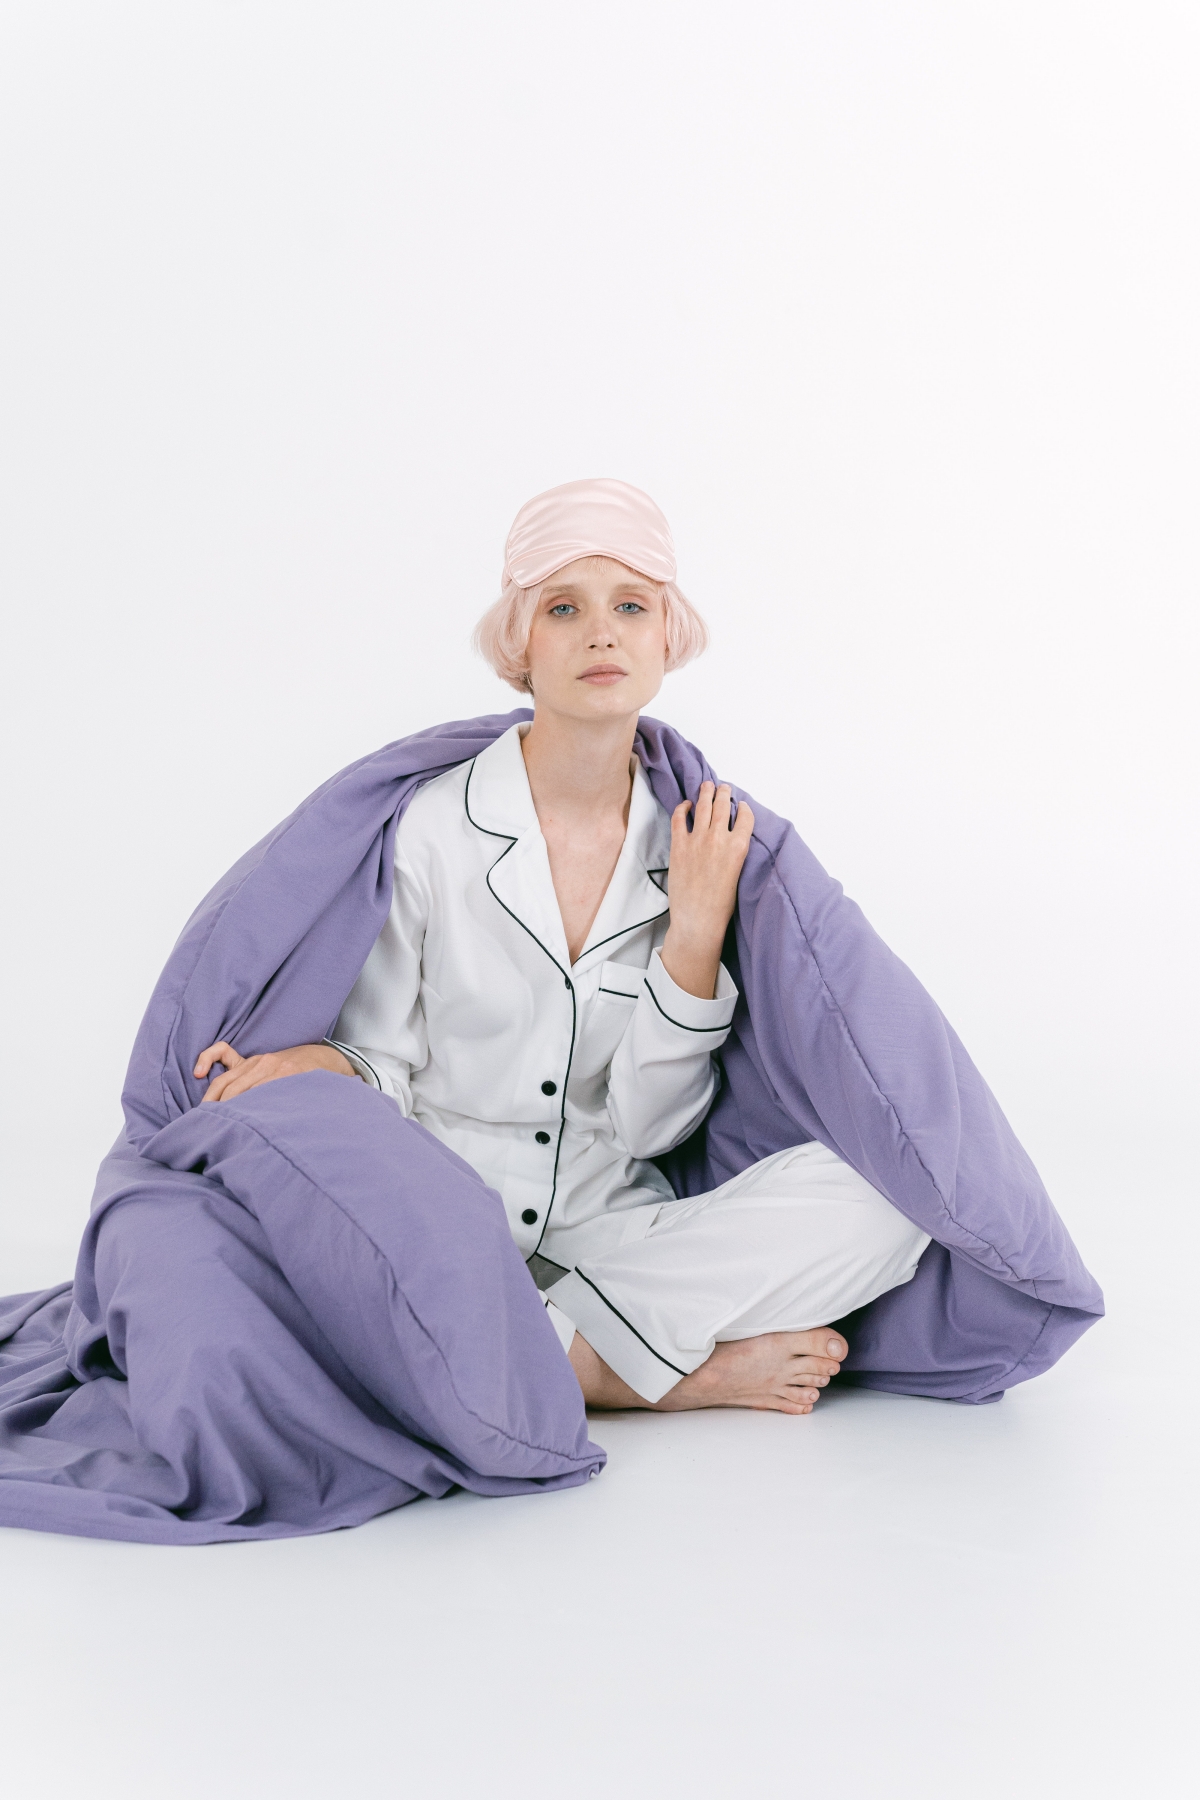 Sleep Hygiene: 7 Reasons to Change Your Pajamas More Often